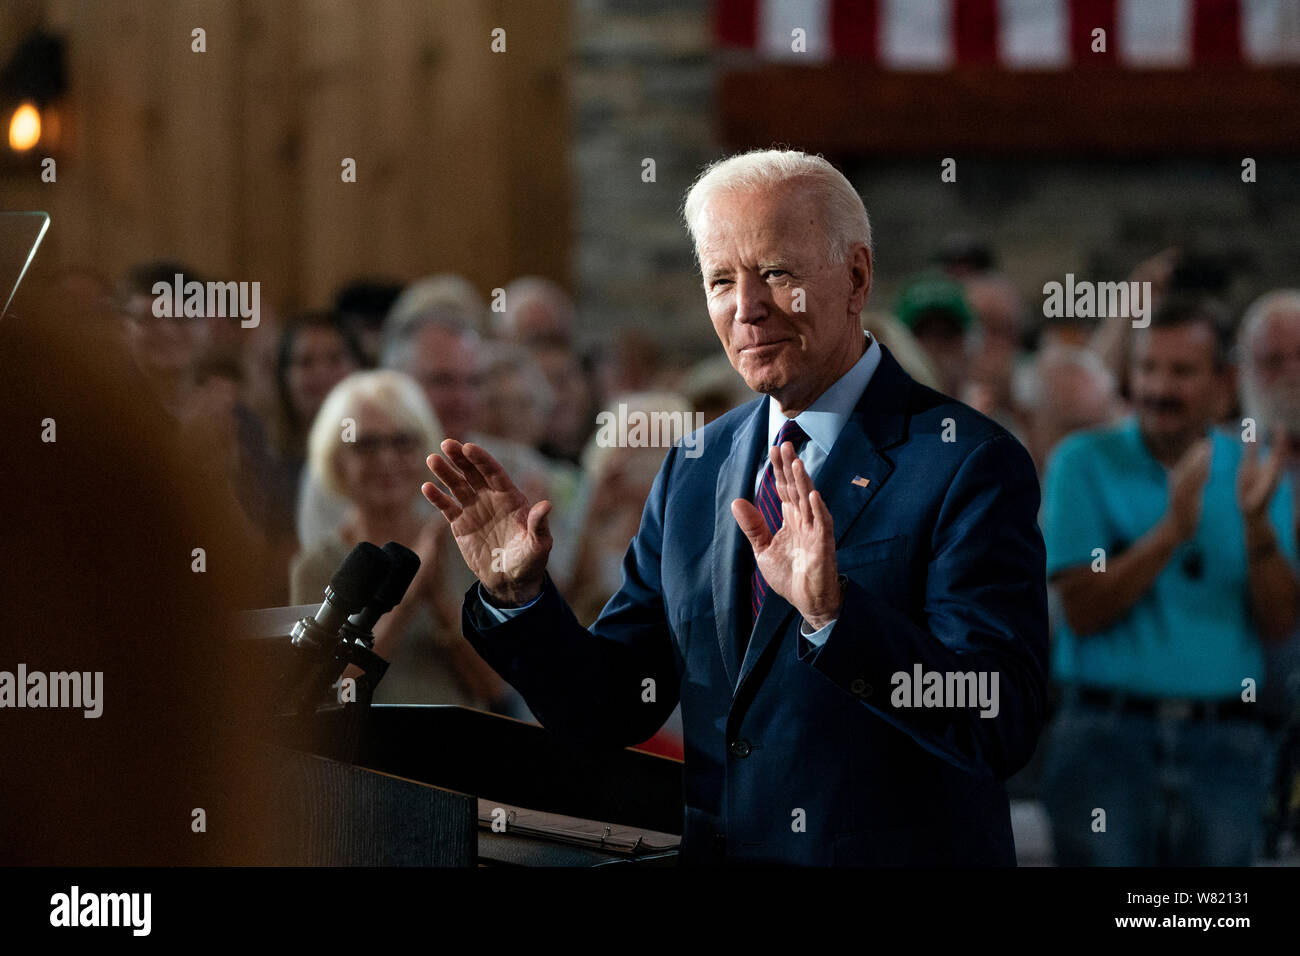 2020 Democratic Presidential candidate, Joe Biden, speaks at a campaign event in Burlington, Iowa on Wednesday, August 7, 2019. Biden is kicking off a 4 day tour of Iowa. Credit: Alex Edelman/CNP/MediaPunch Stock Photo